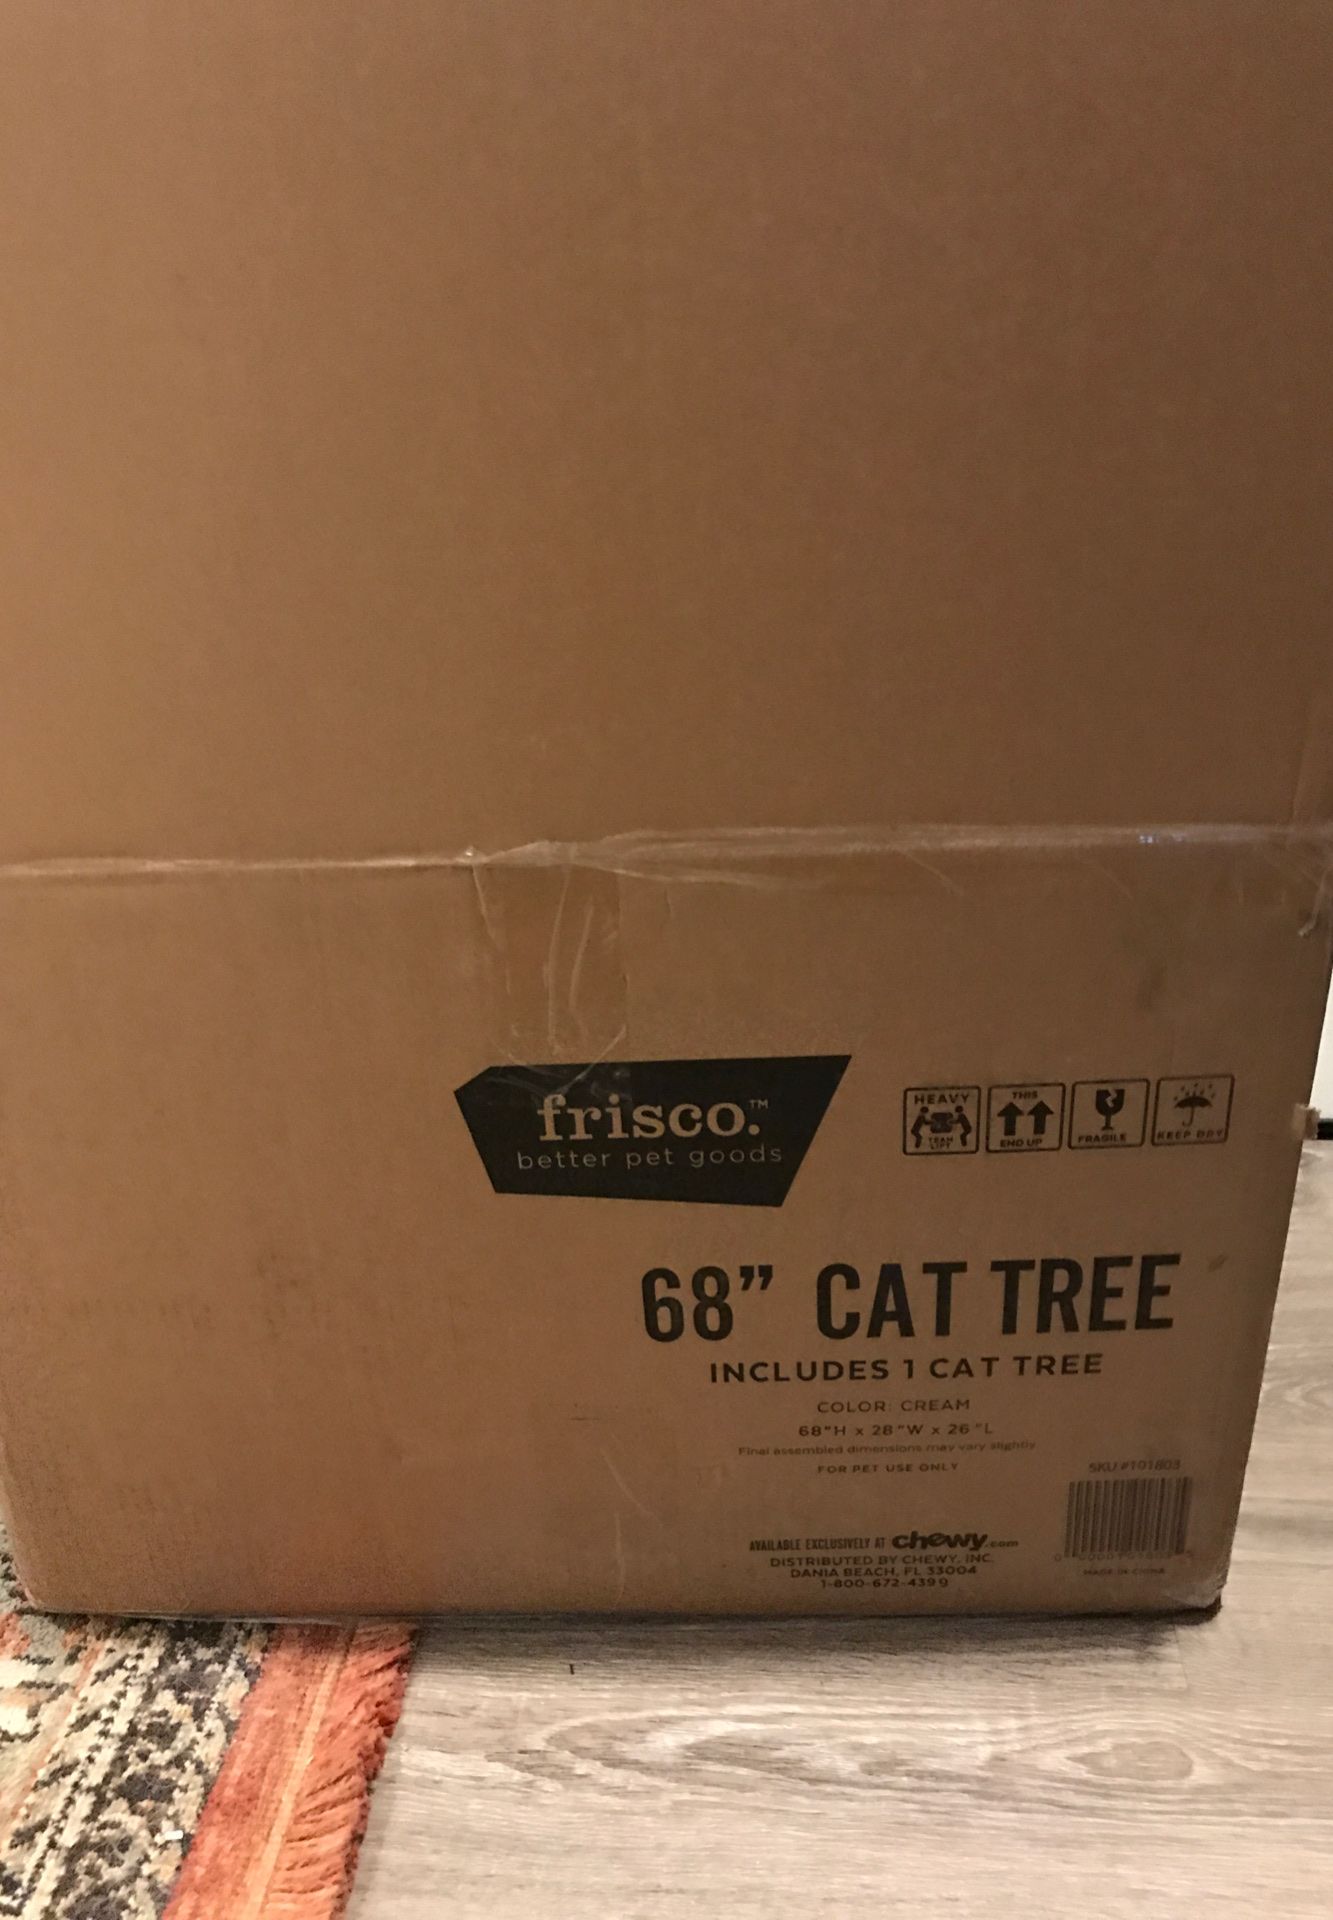 Cat tree 40$ new in box